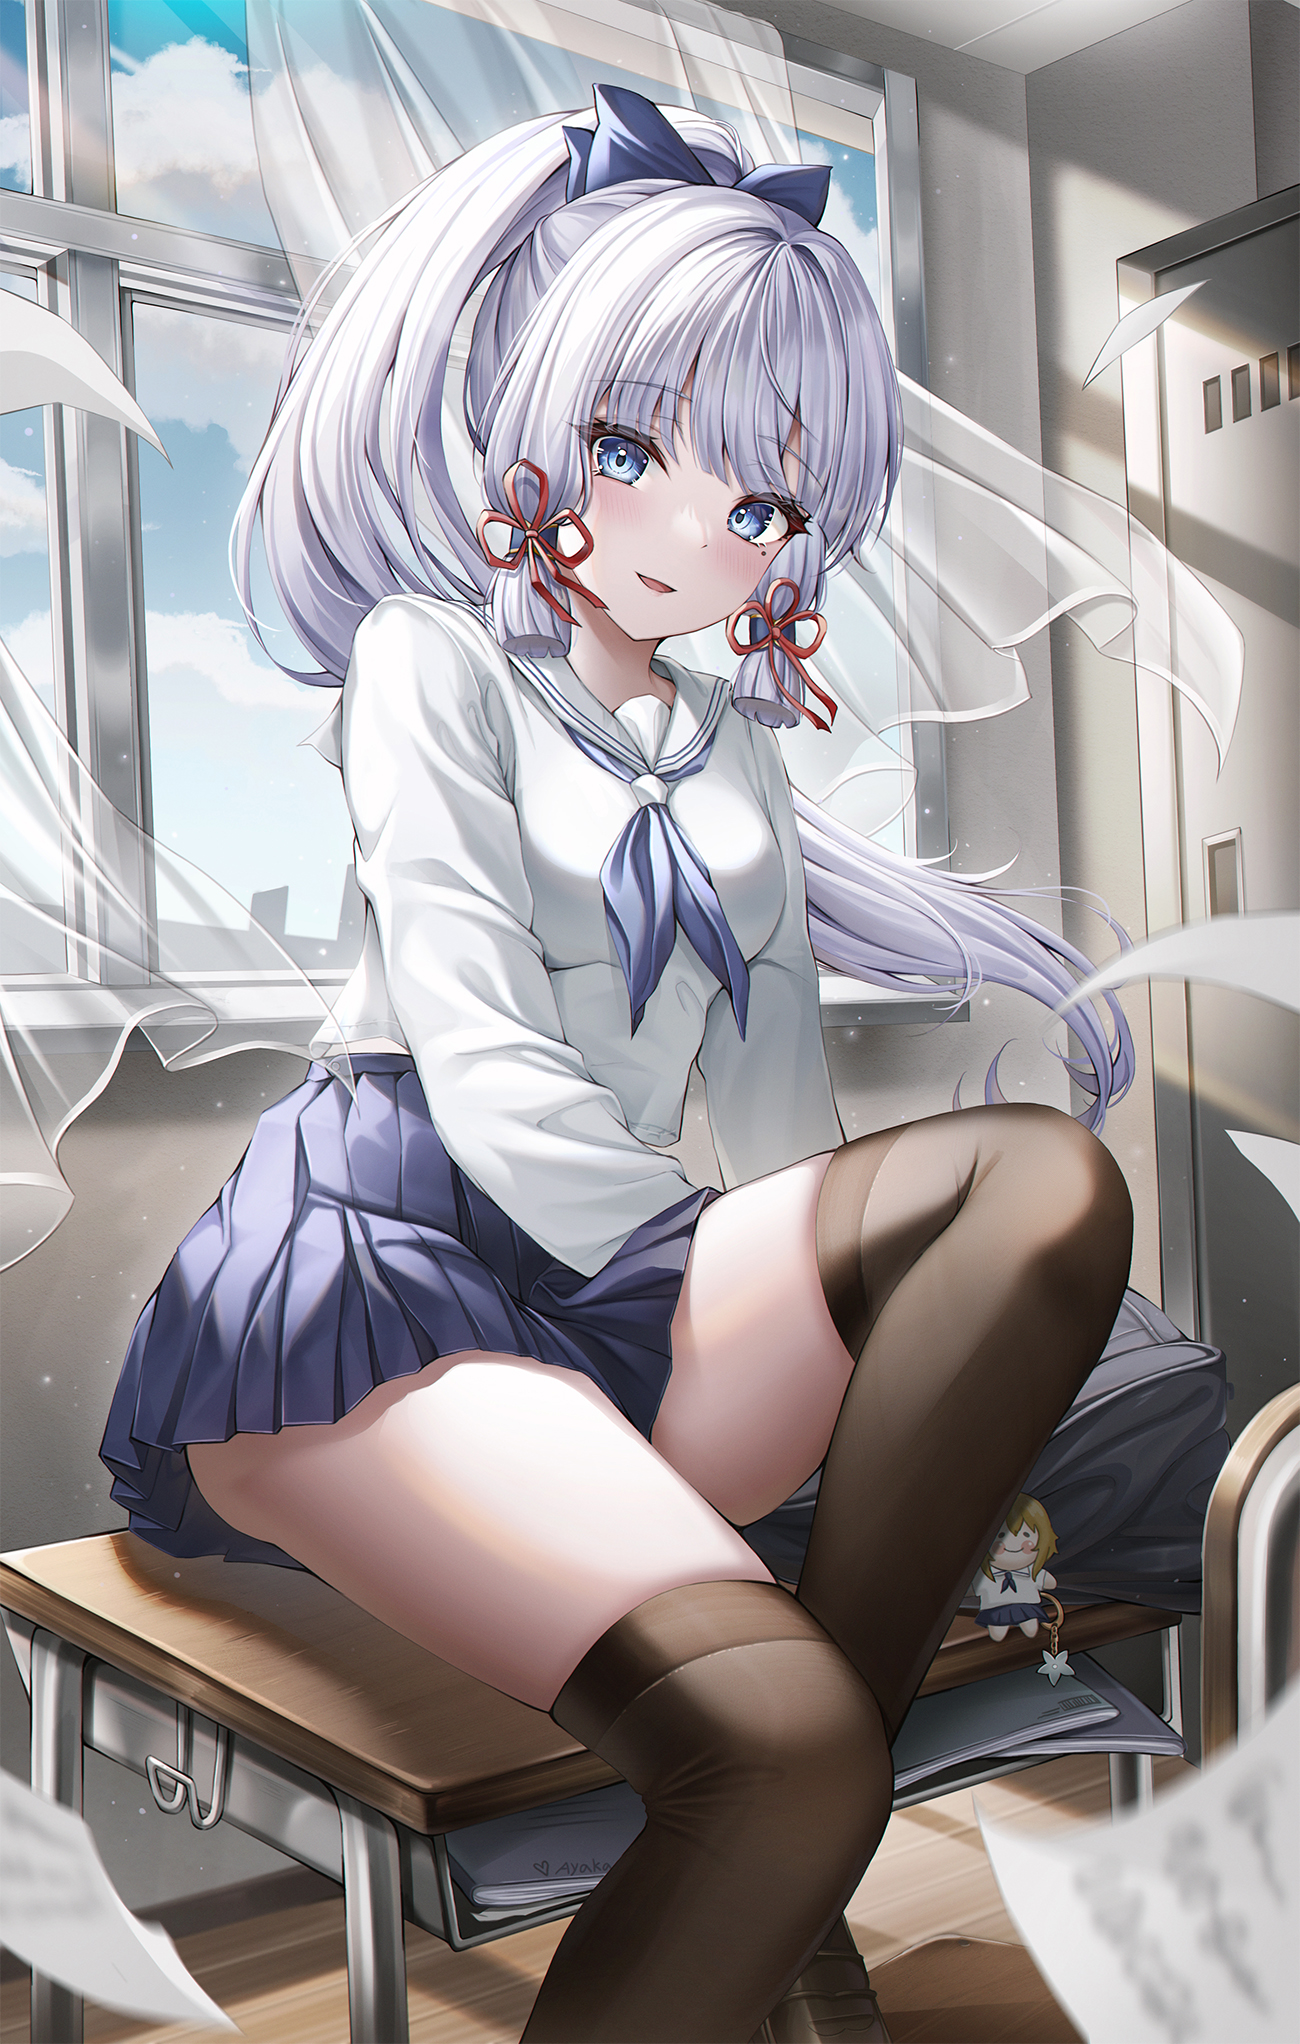 Anime 1300x2044 anime anime girls Genshin Impact Kamisato Ayaka (Genshin Impact) blue hair blue eyes school uniform stockings classroom ponytail